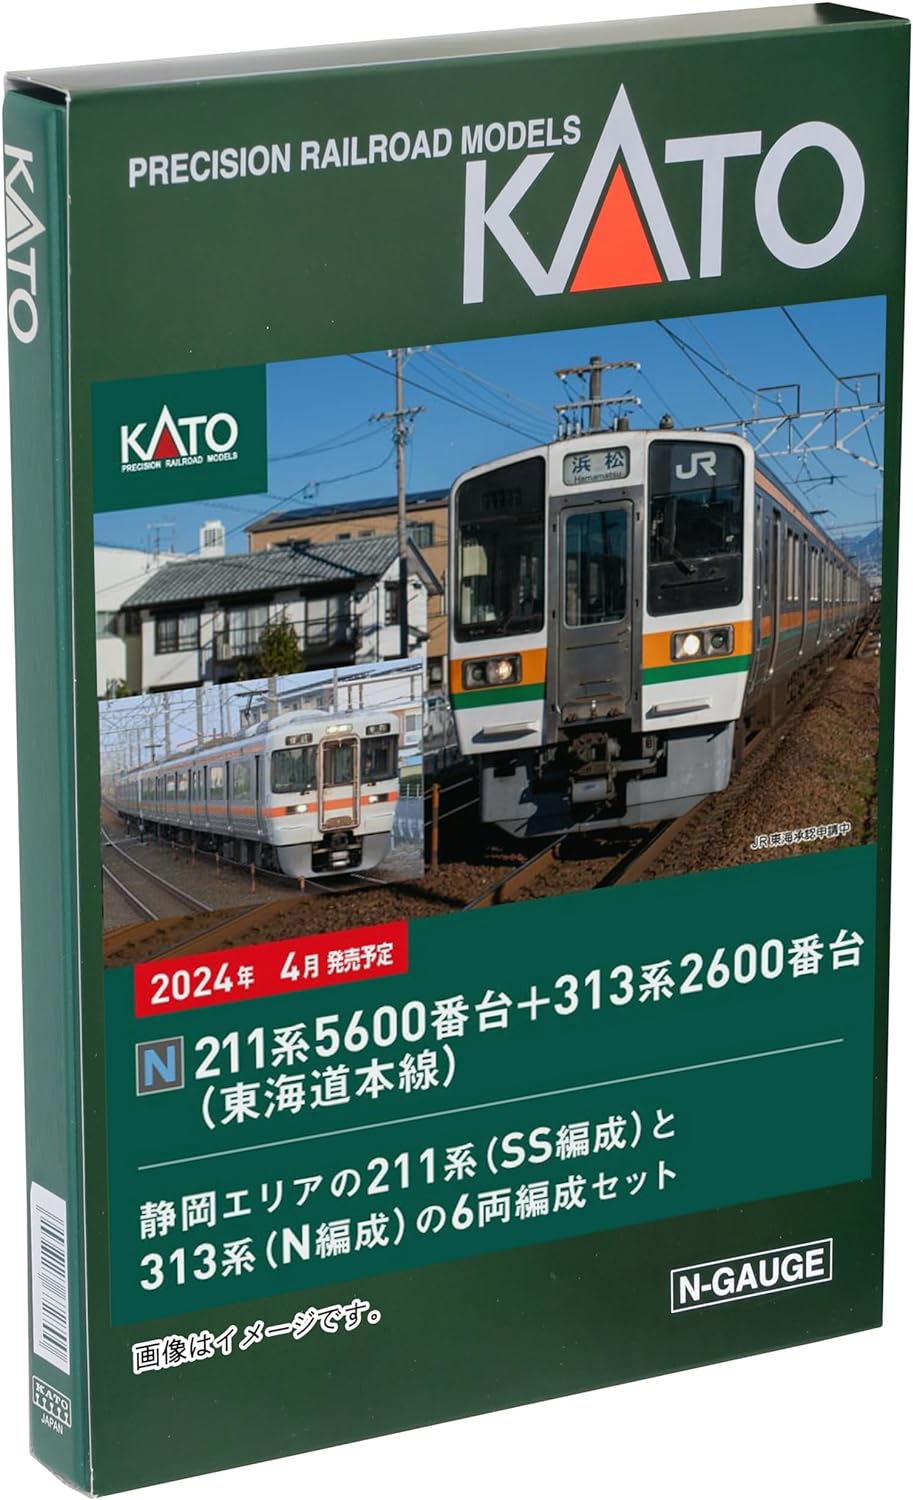 KATO 10-1862 N Gauge 211 Series 5600 Series + 313 Series 2600 Series Tokaido Main Line 6 Car Set - BanzaiHobby